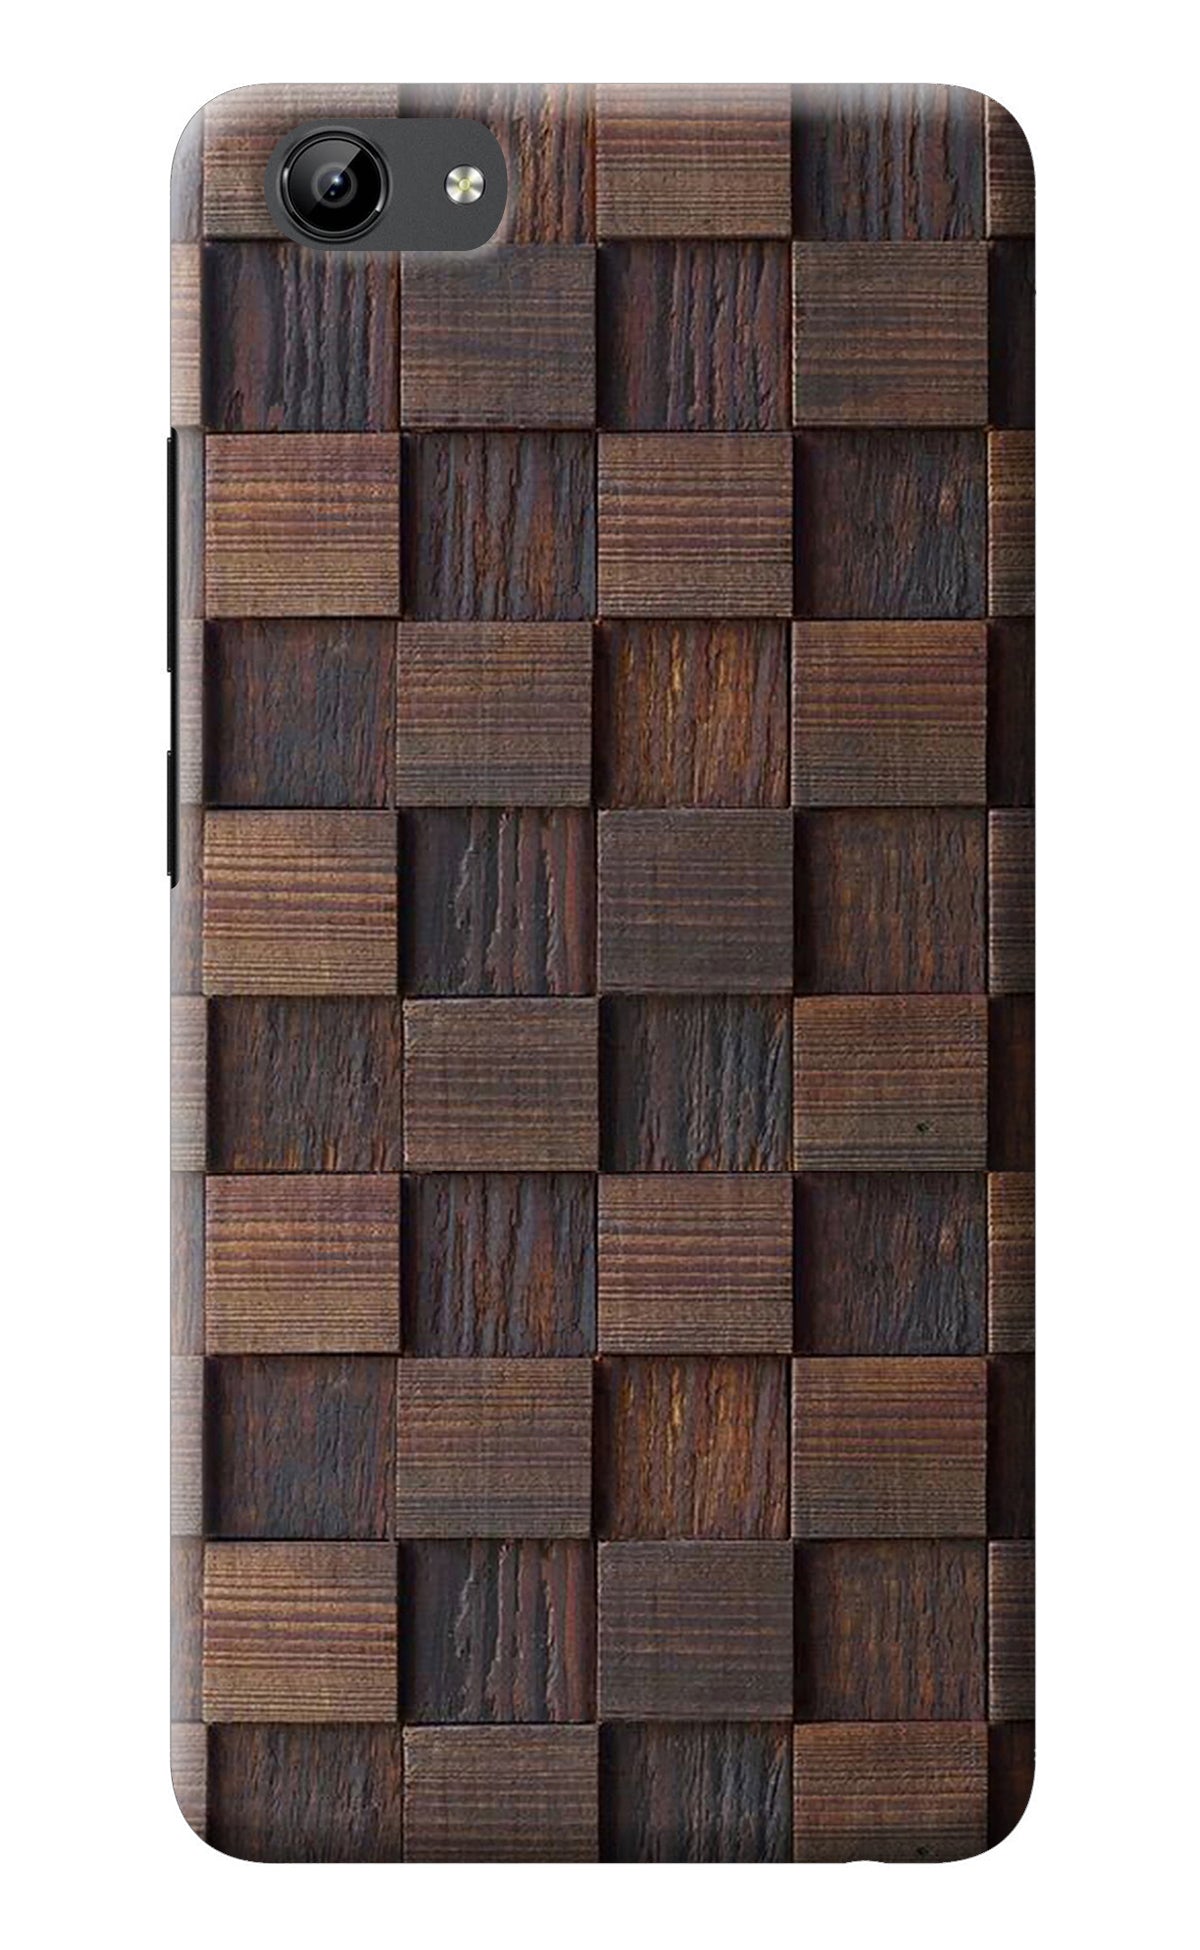 Wooden Cube Design Vivo Y71 Back Cover